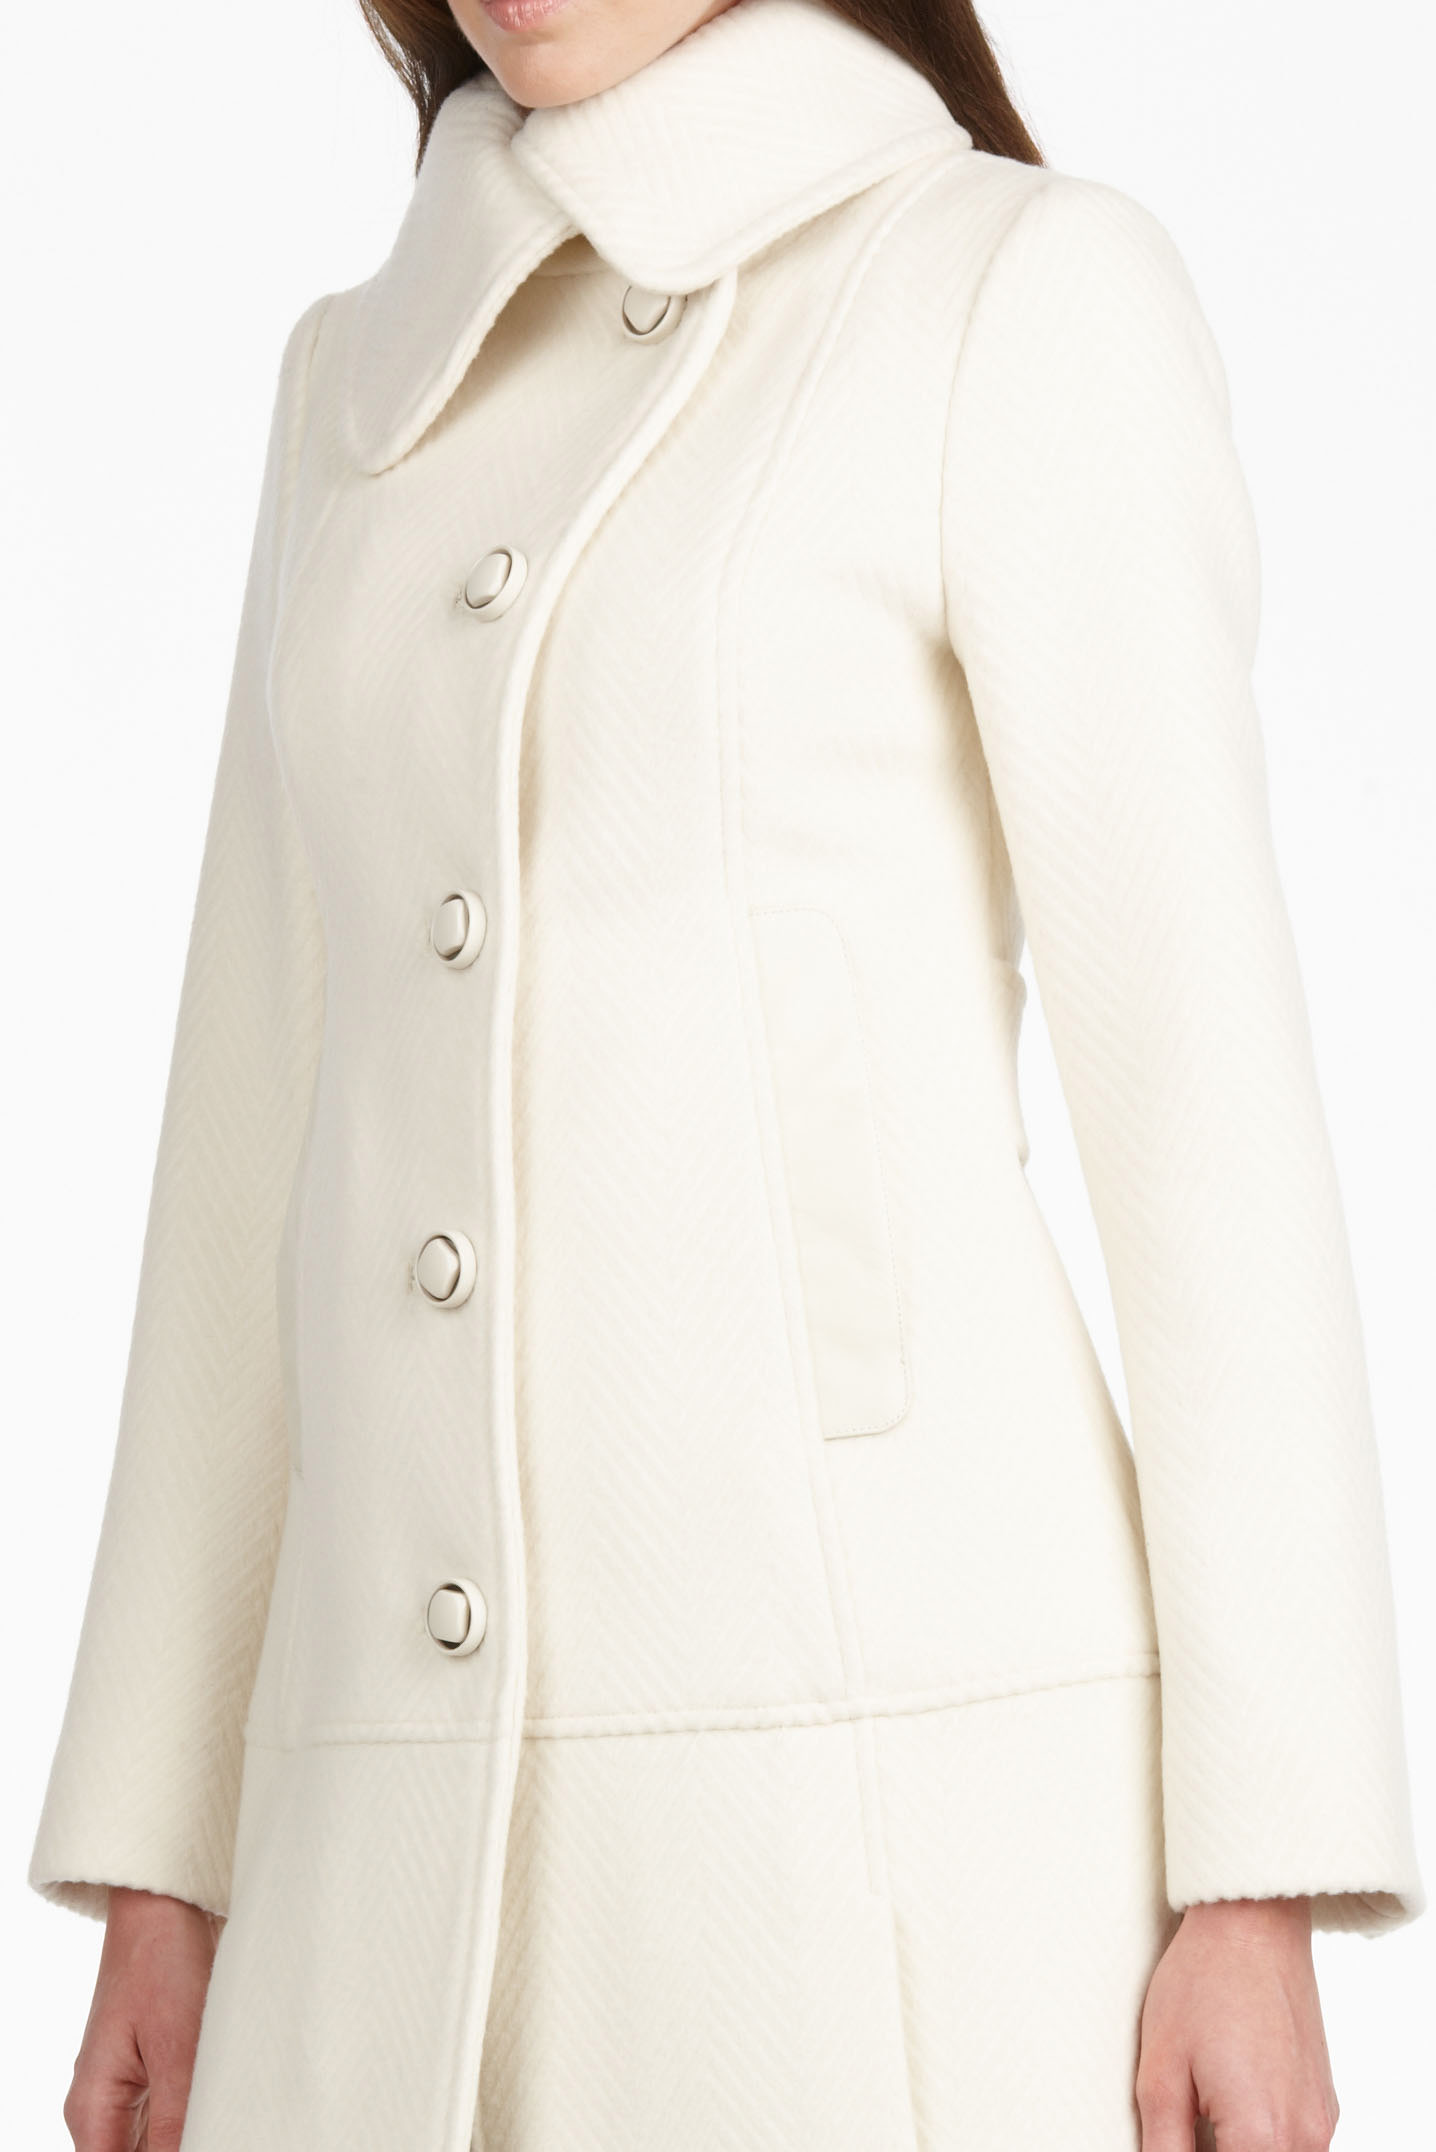 White Wool Coats For Women